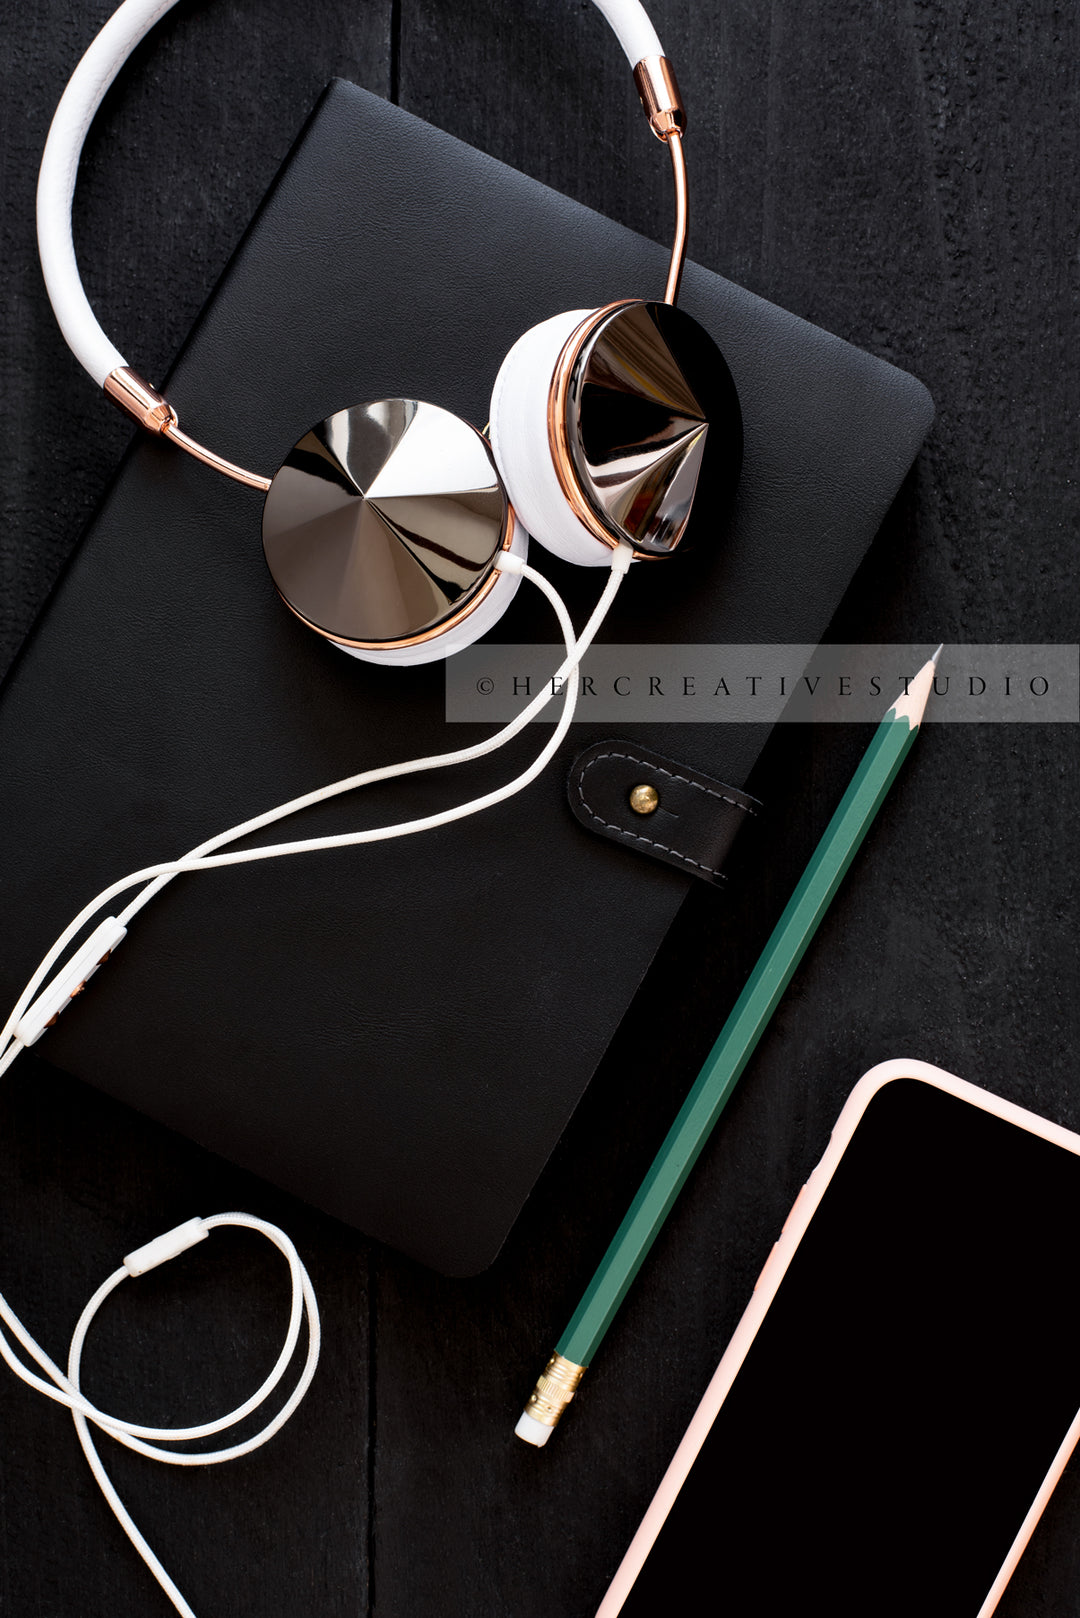 Headphones, Notebook & Pencil on Black Desk